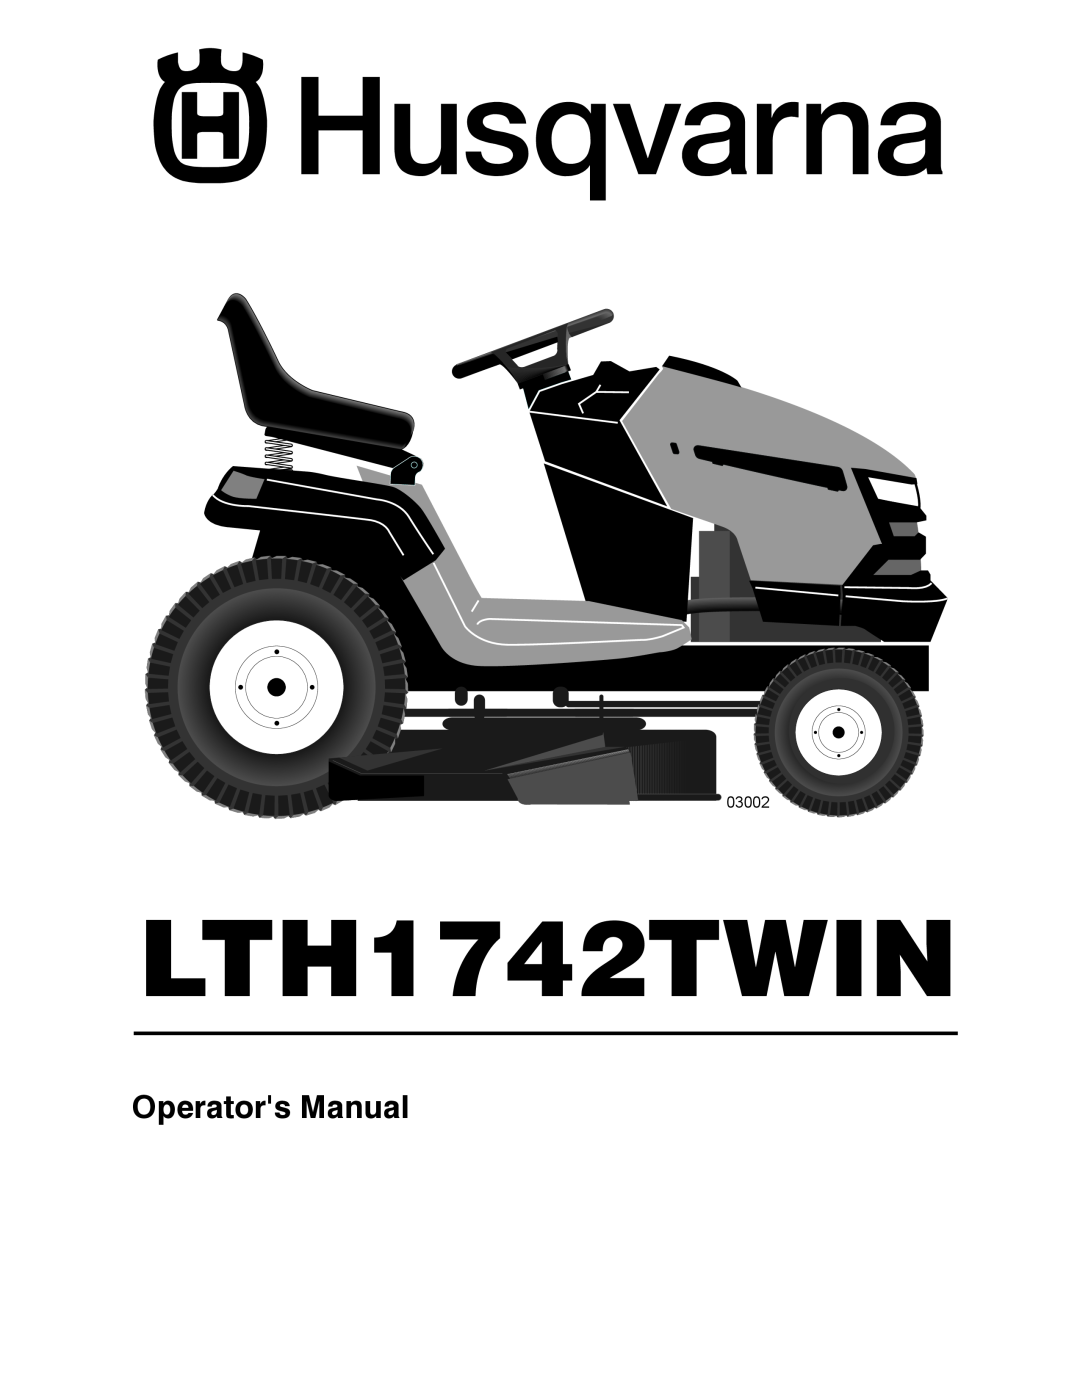 Husqvarna LTH1742TWIN manual Operators Manual, 03002 